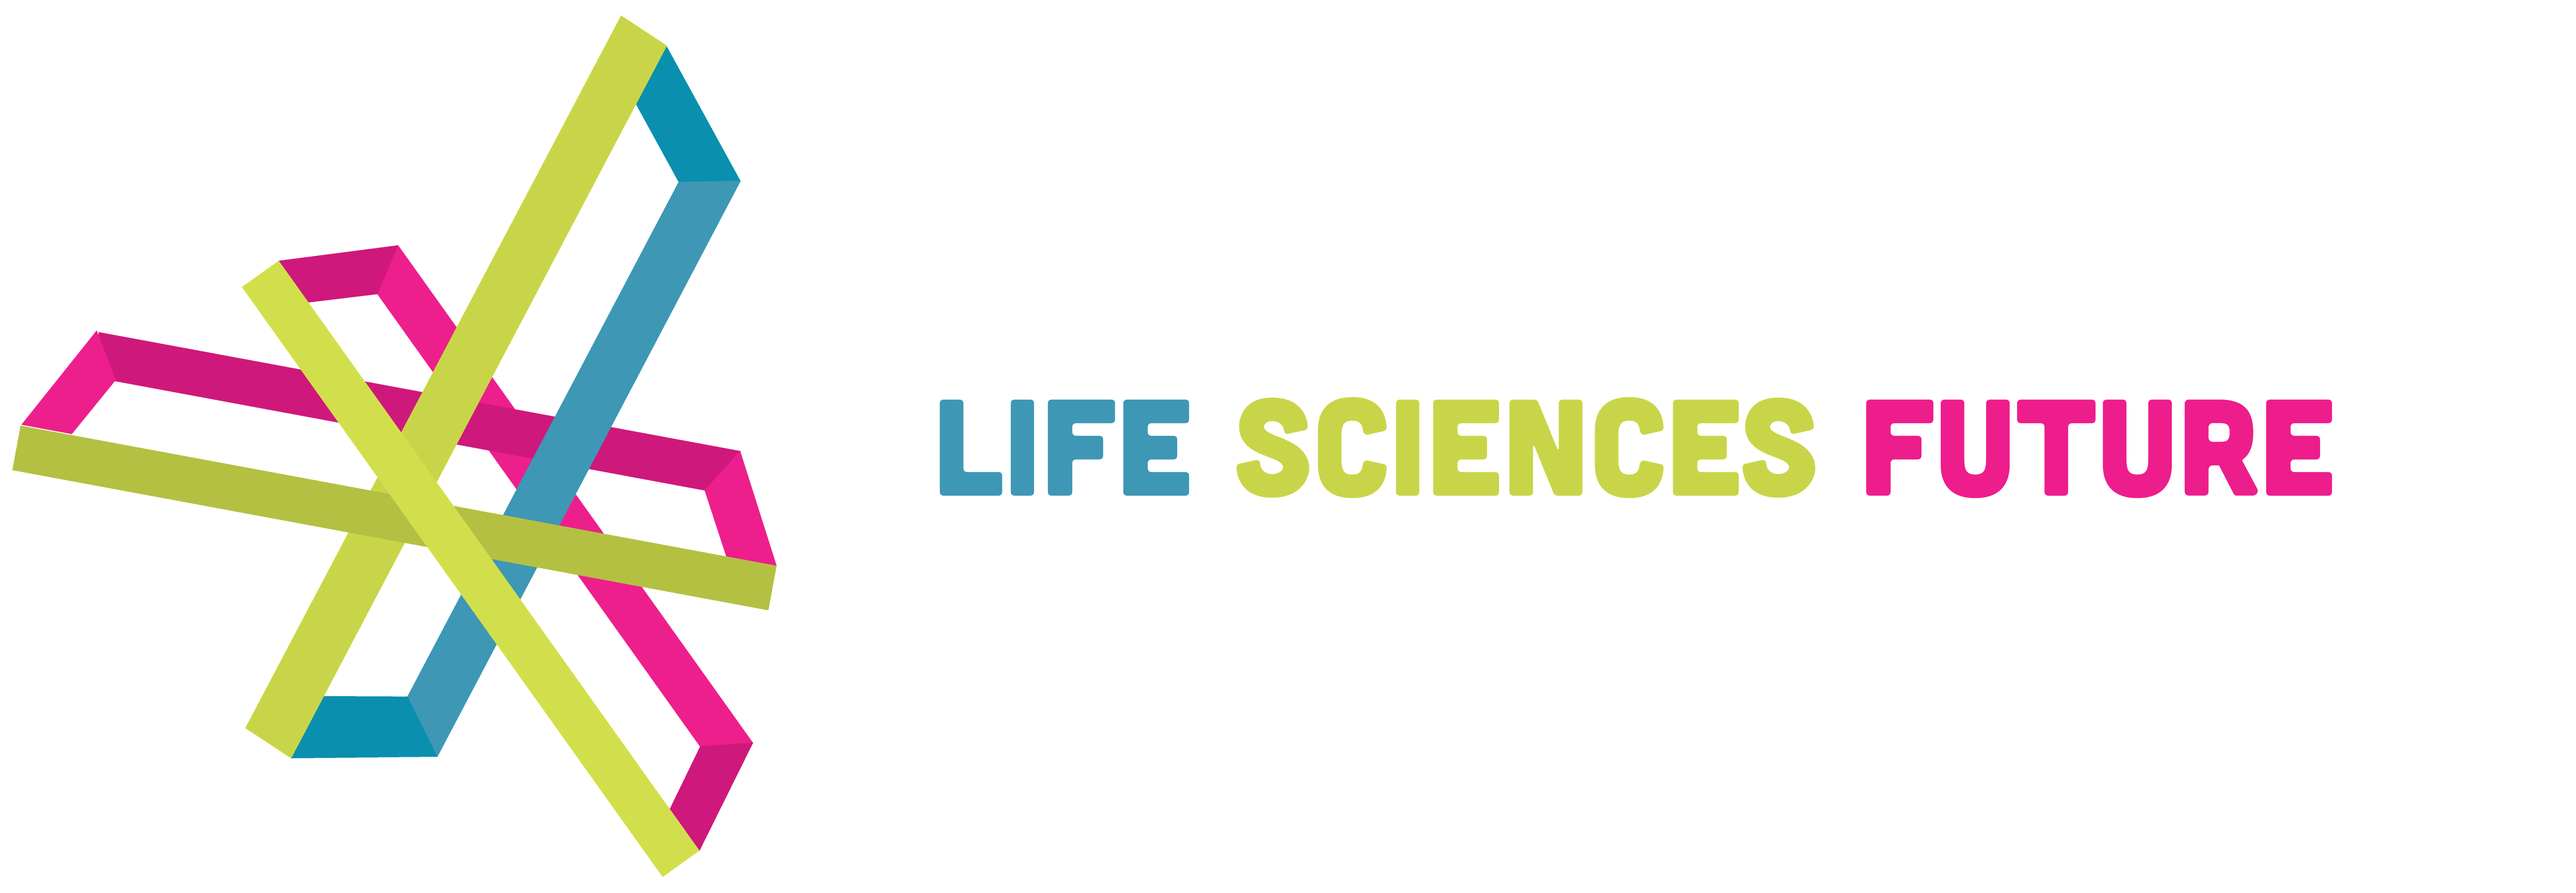 Life Sciences Future - BioPharm